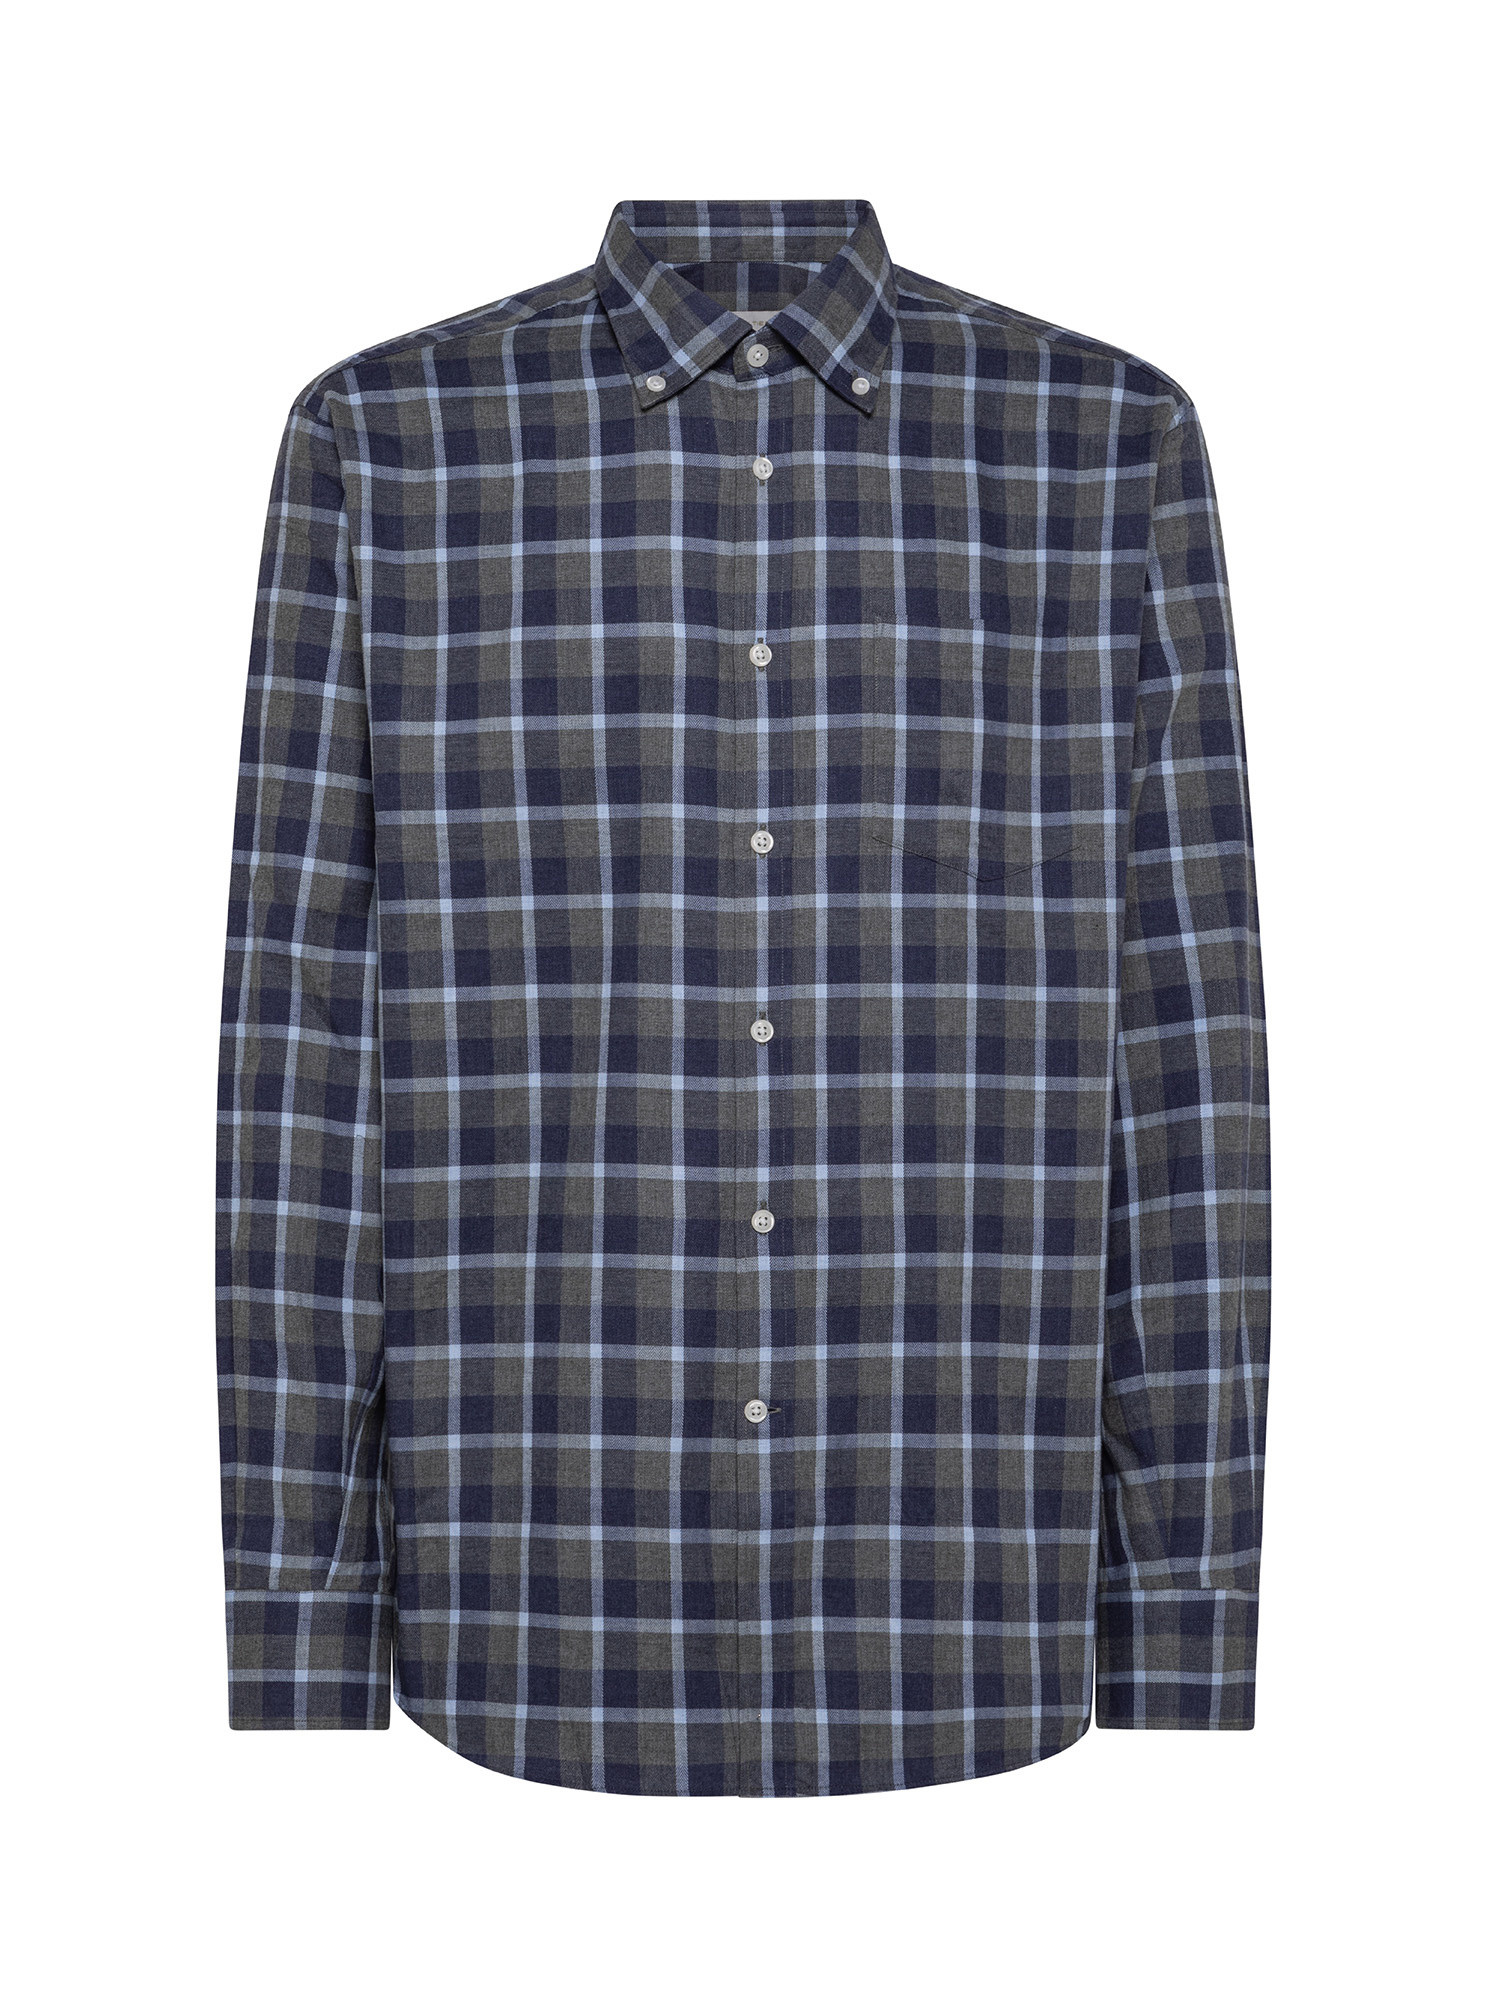 Regular fit shirt in soft organic cotton flannel, Denim, large image number 1